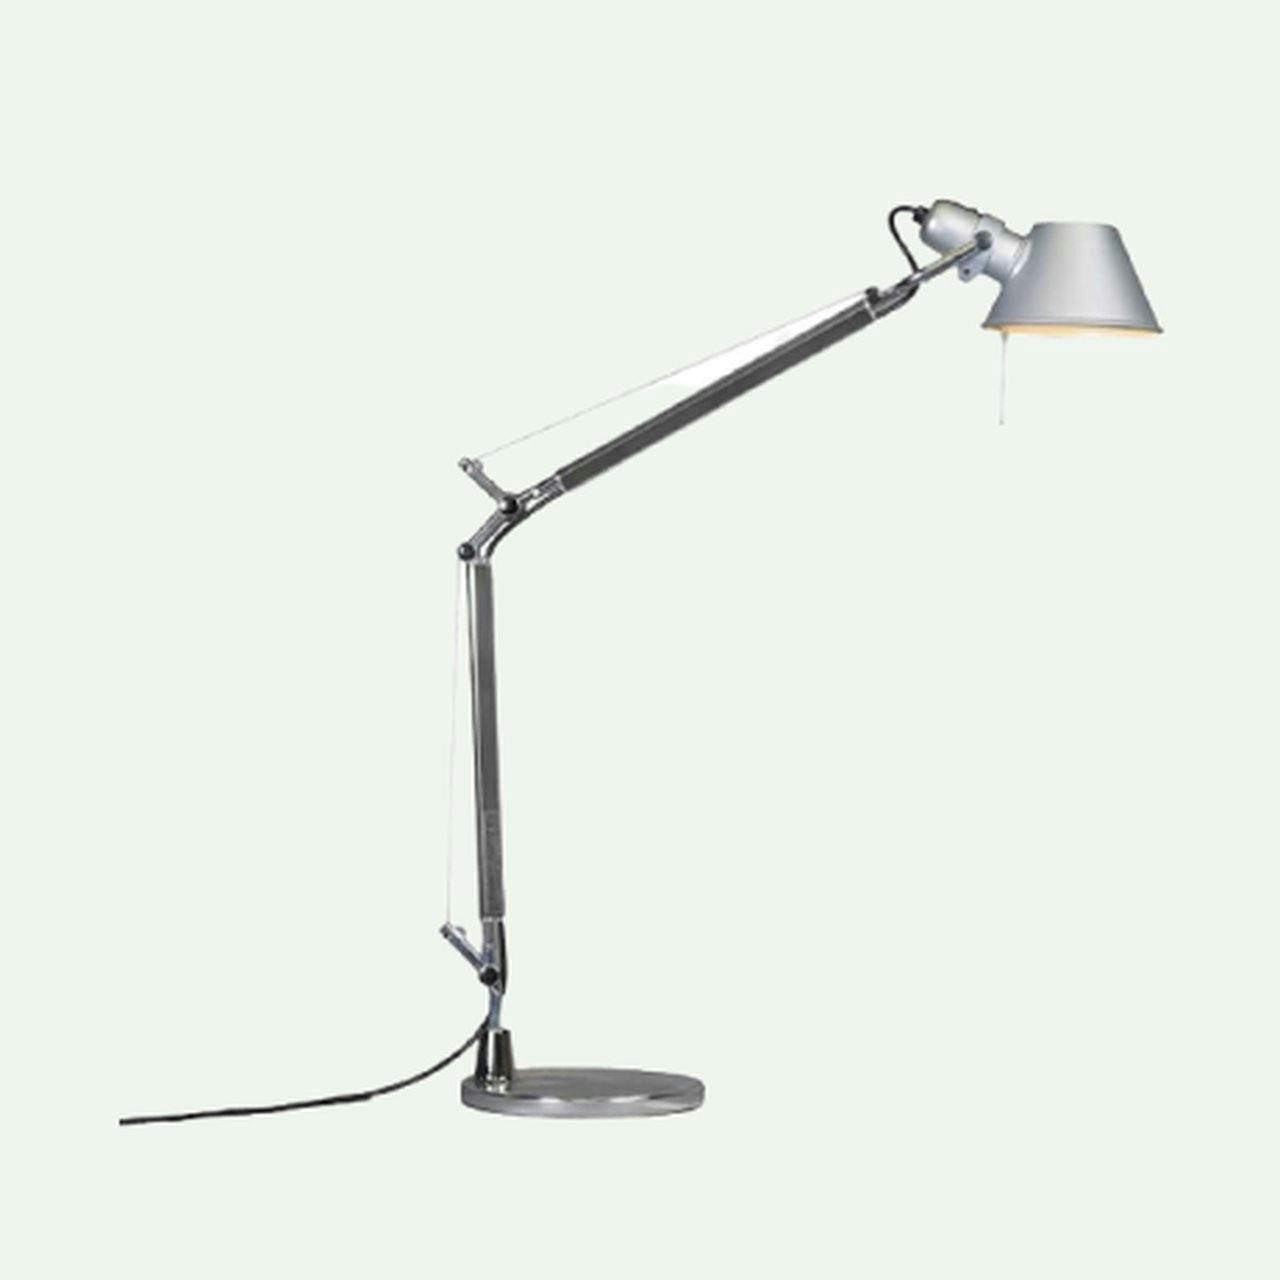 60's design Desk lamps